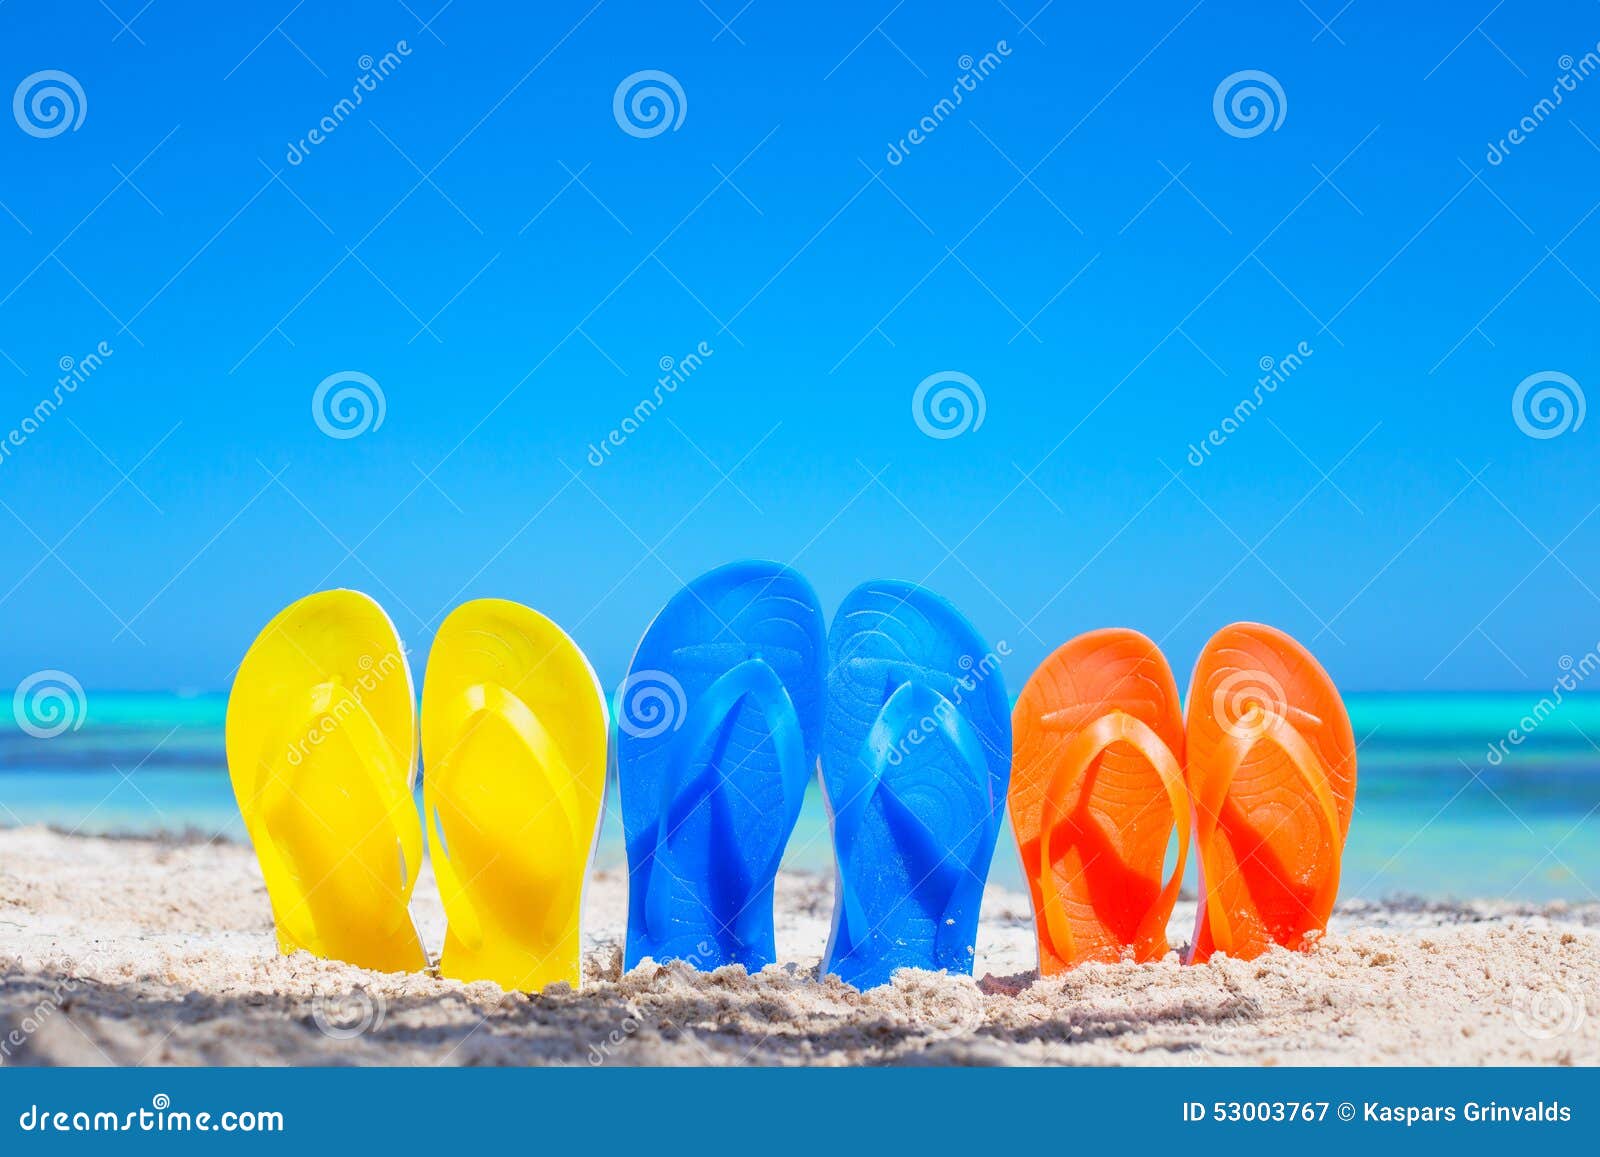 colorful beach flip flops sandals on the beach